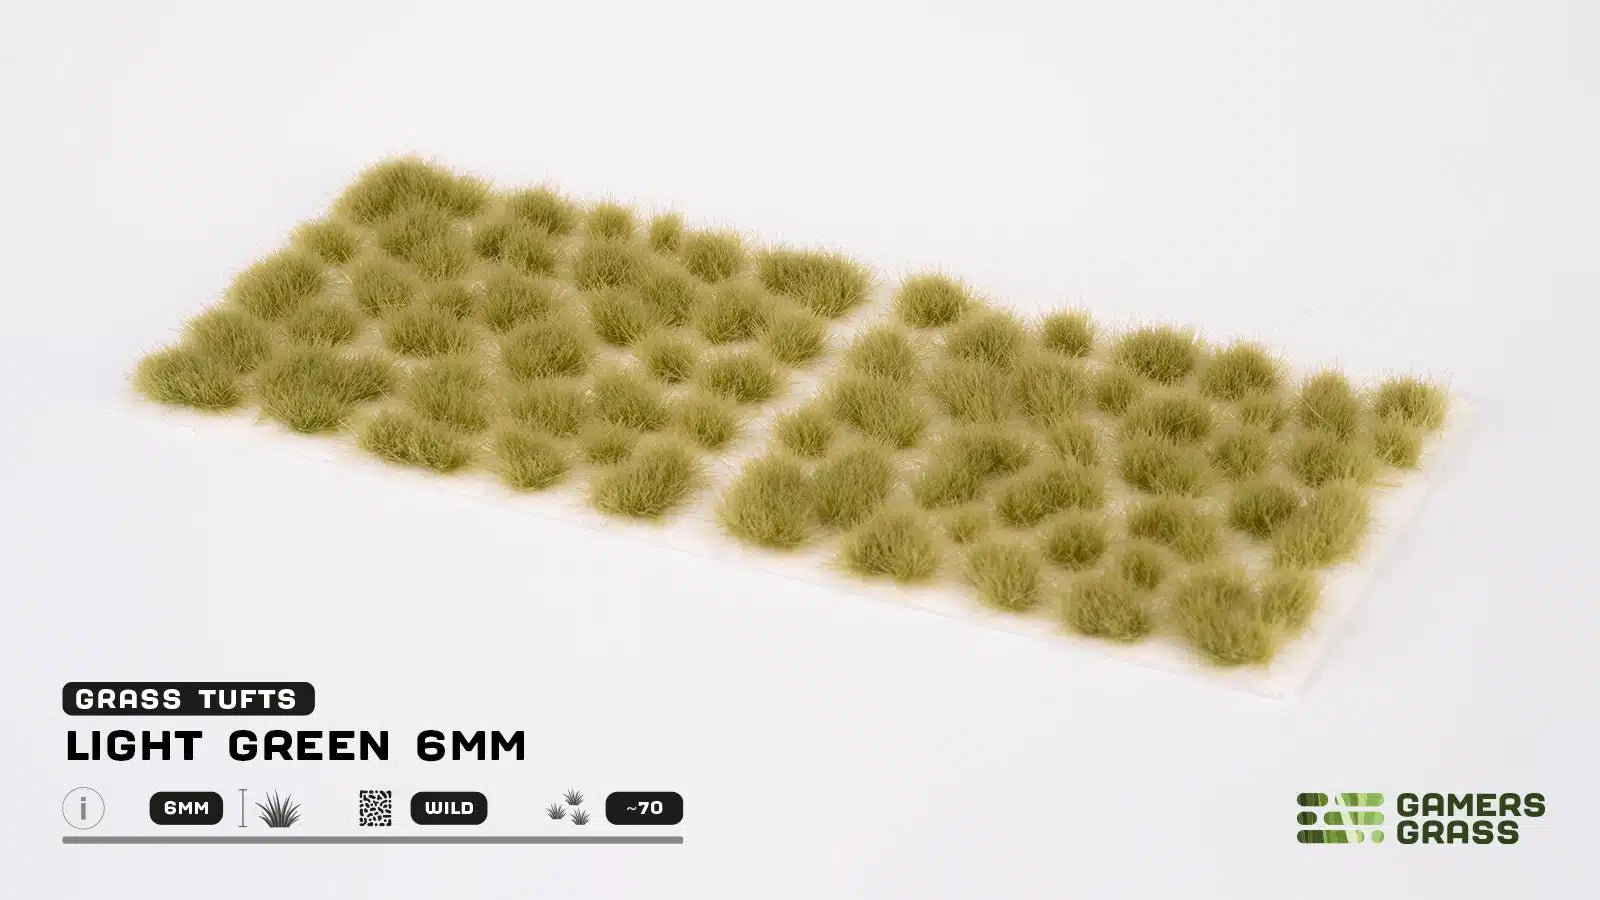 Grass Tufts - Light Green 6mm - Gamers Grass - 70x Self Adhesives - Gootzy Gaming